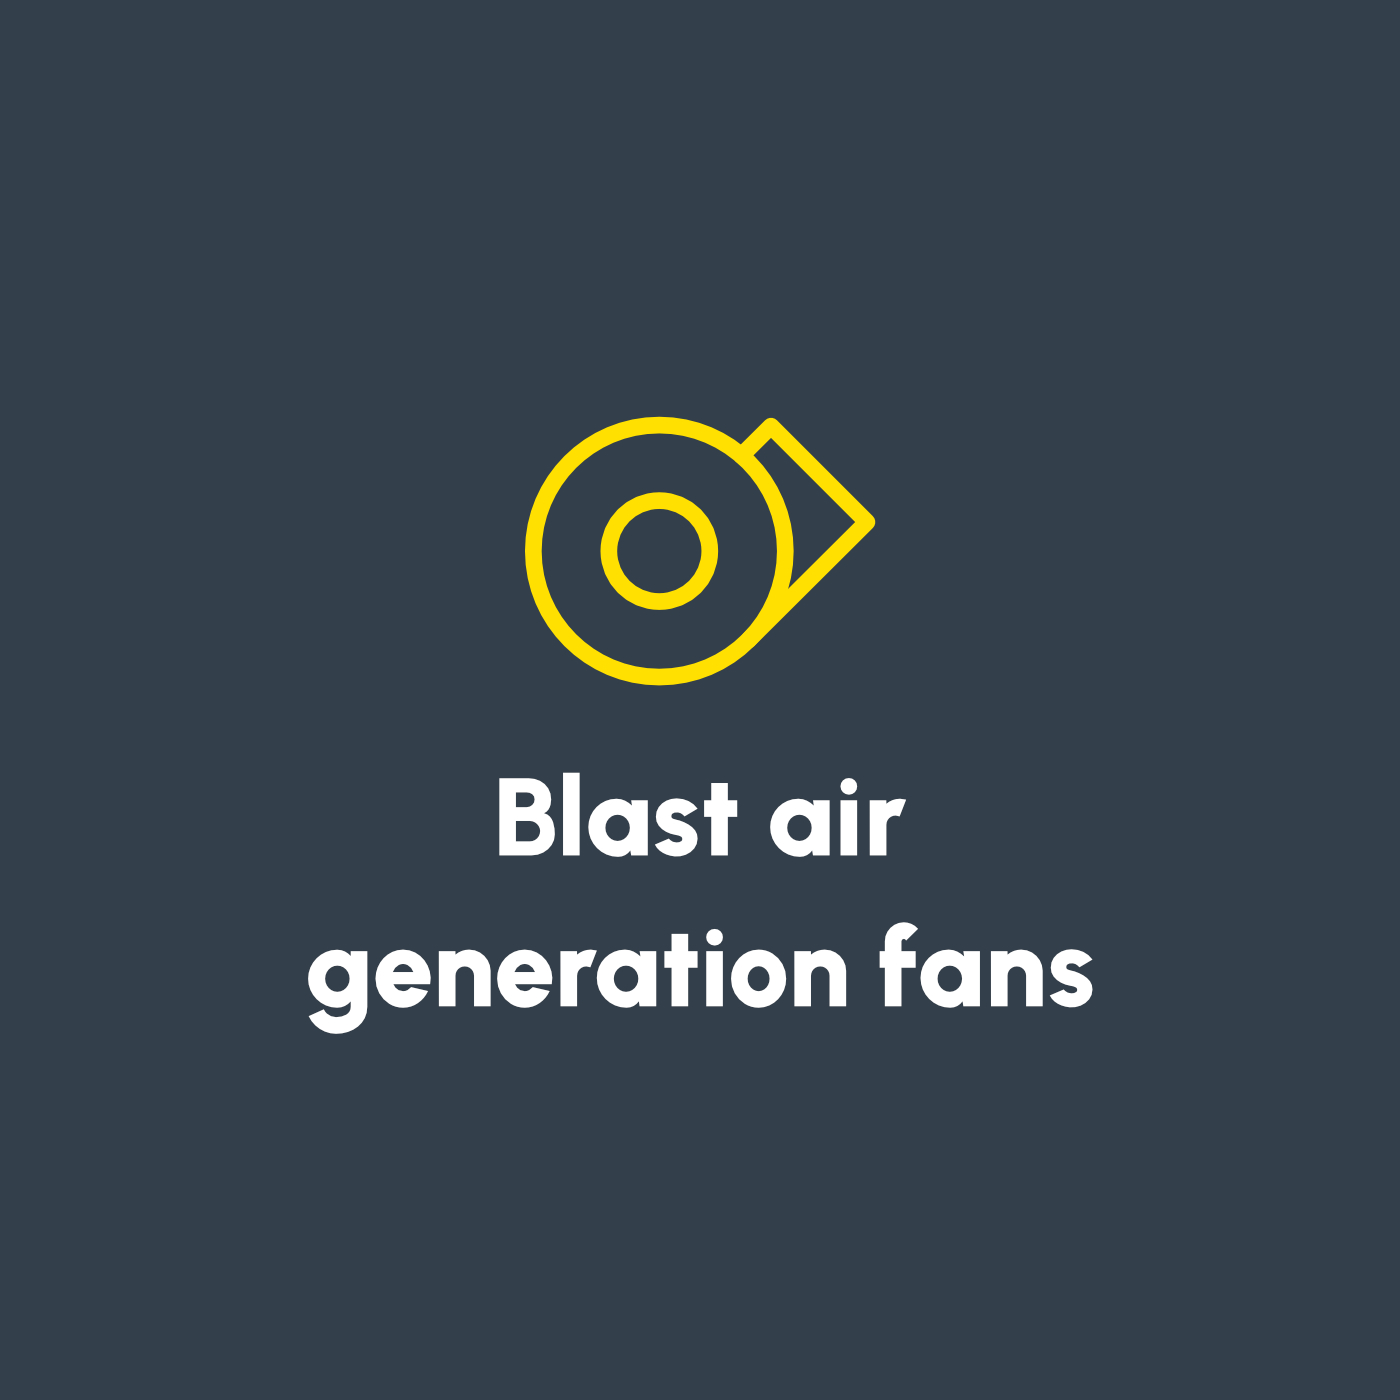 Blast air generation fans